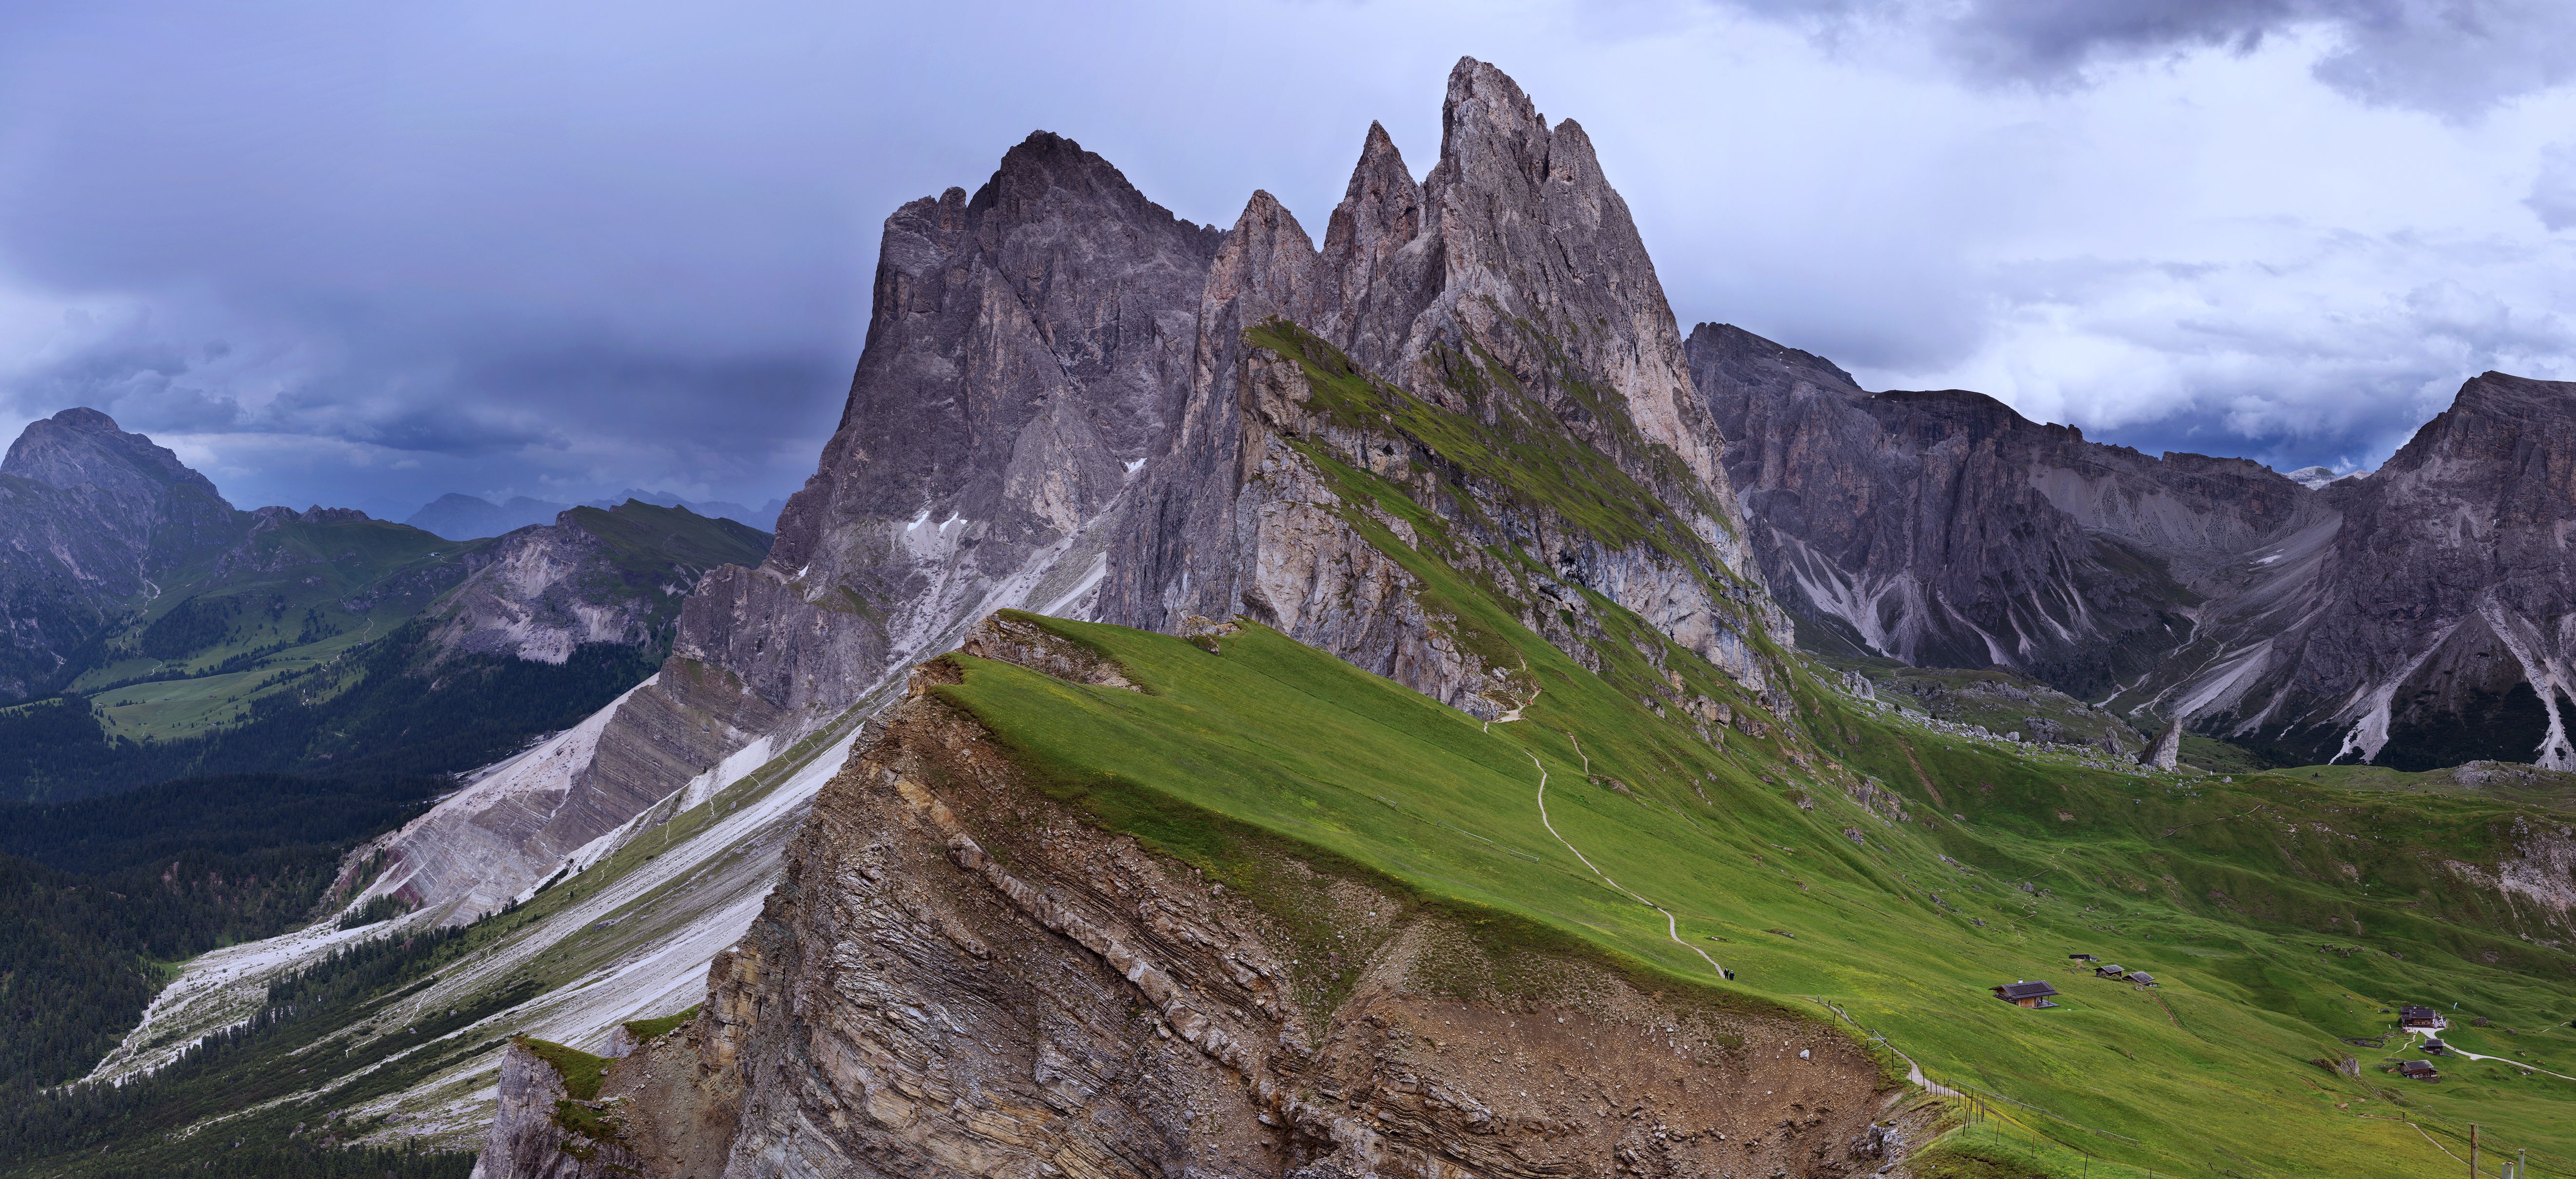 Photos for free Odle peaks, Seceda, Dolomites the desktop